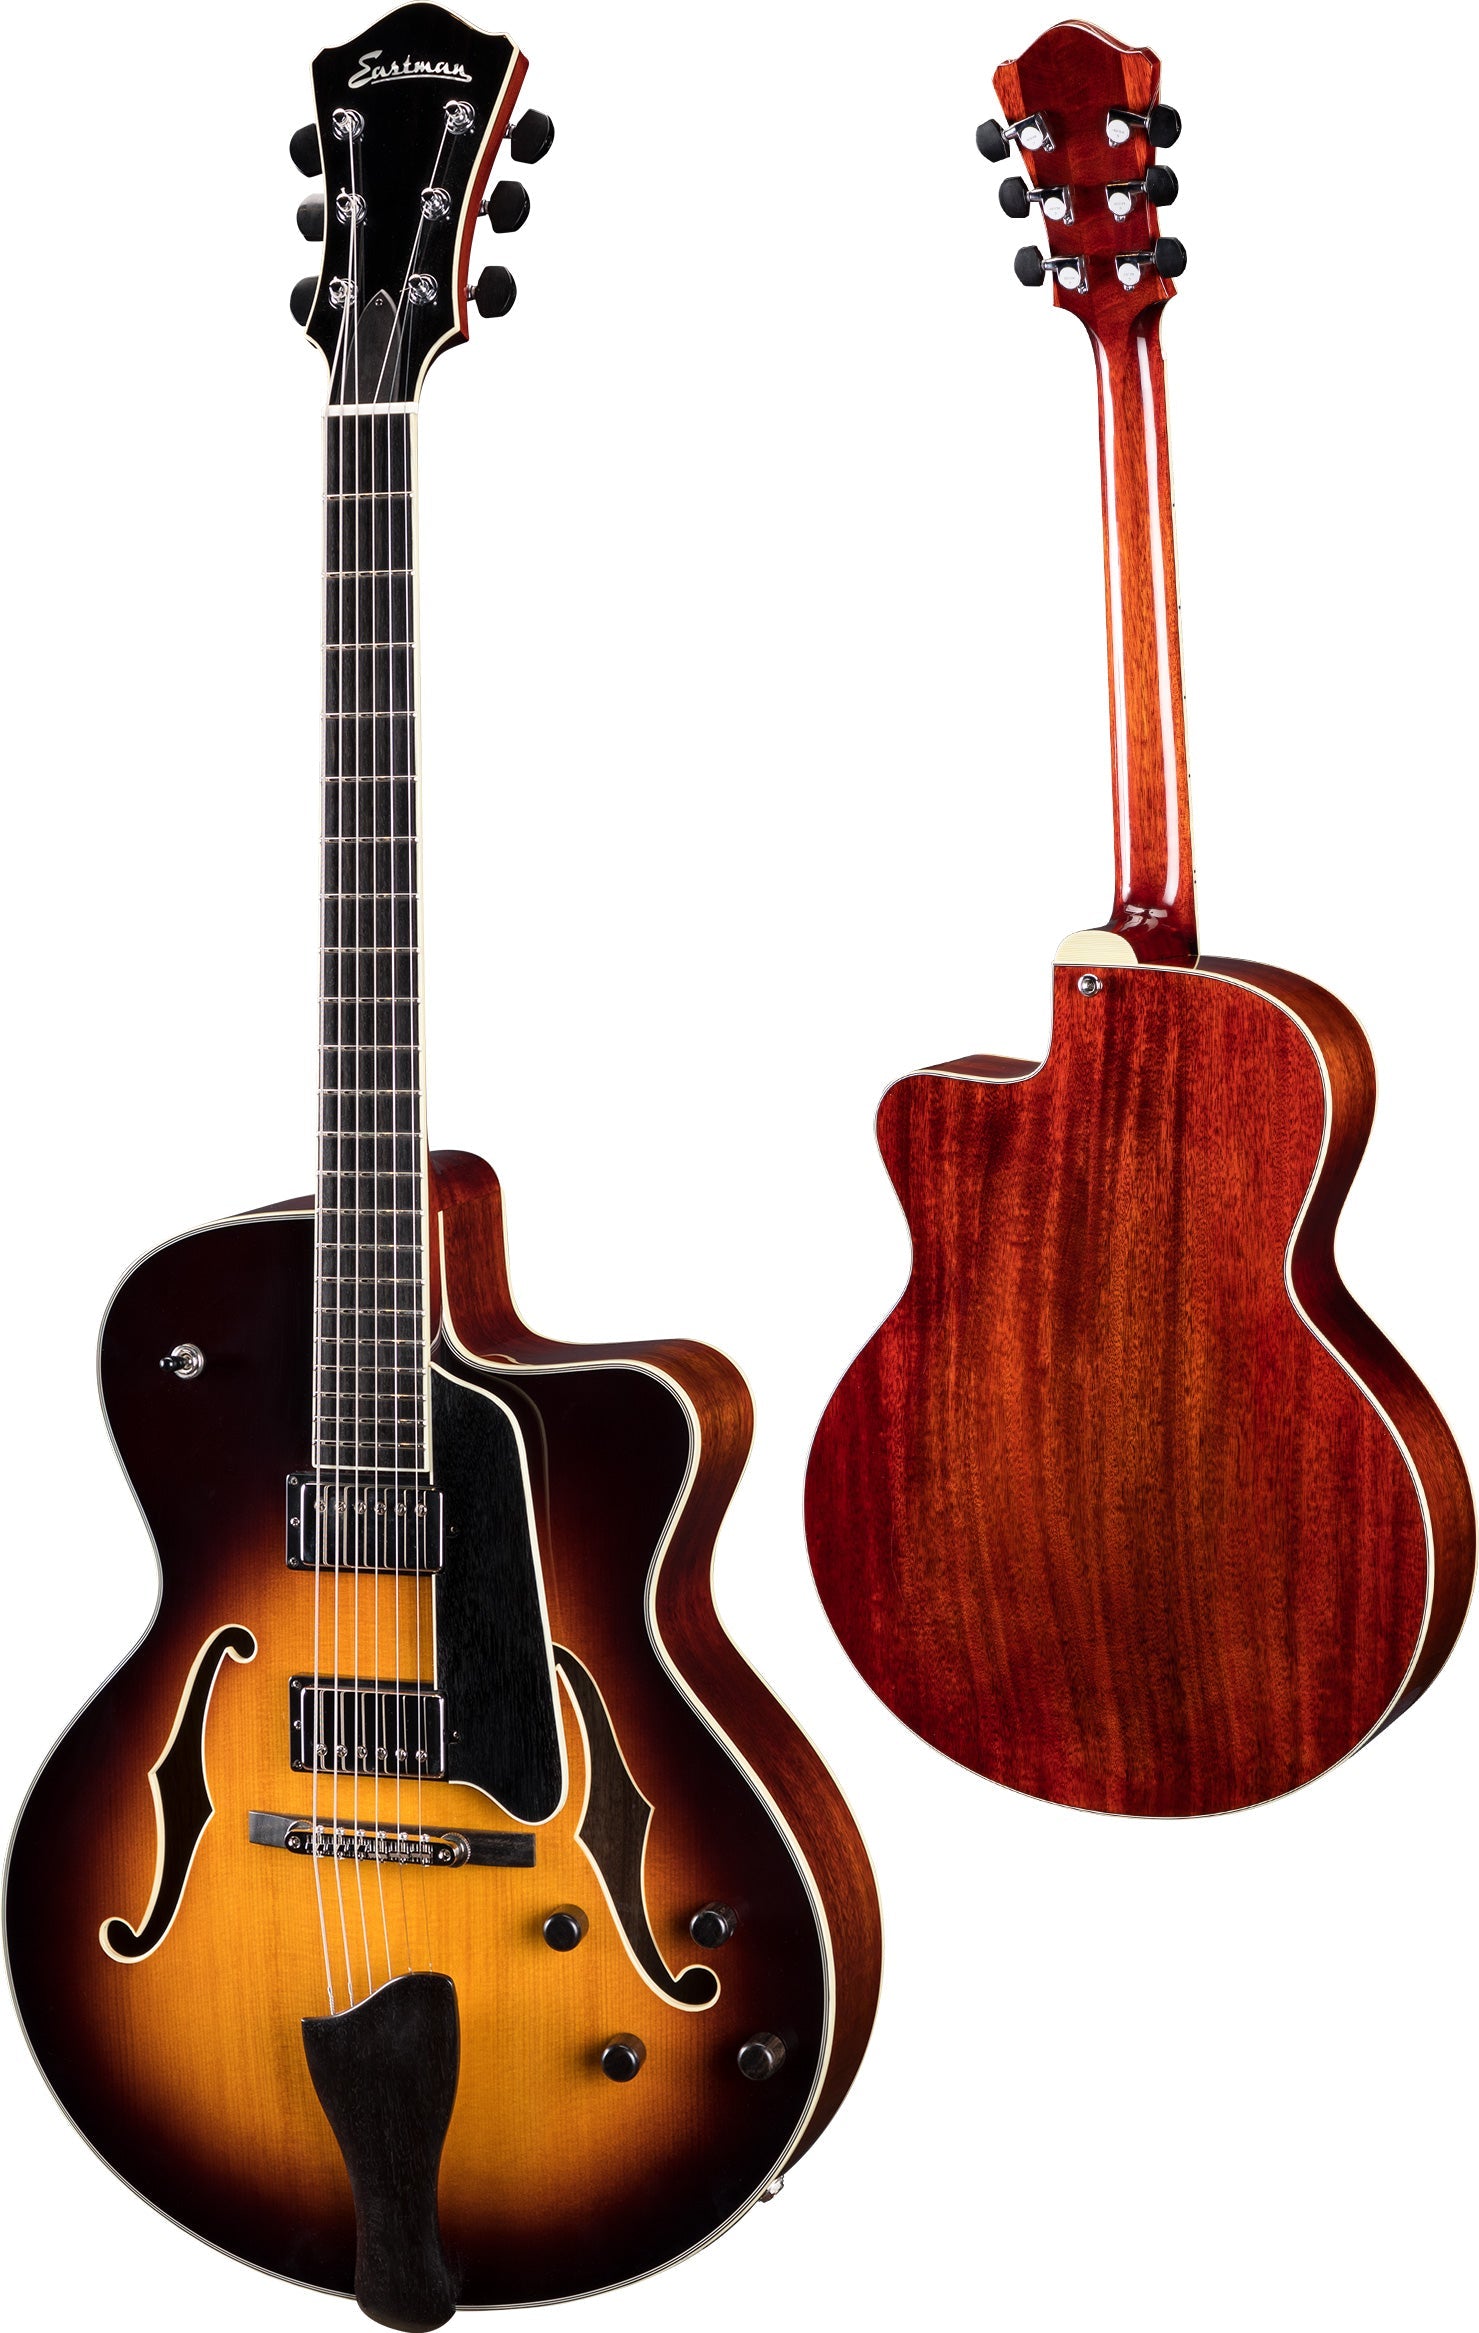 Eastman AR605ced CS, Electric Guitar for sale at Richards Guitars.